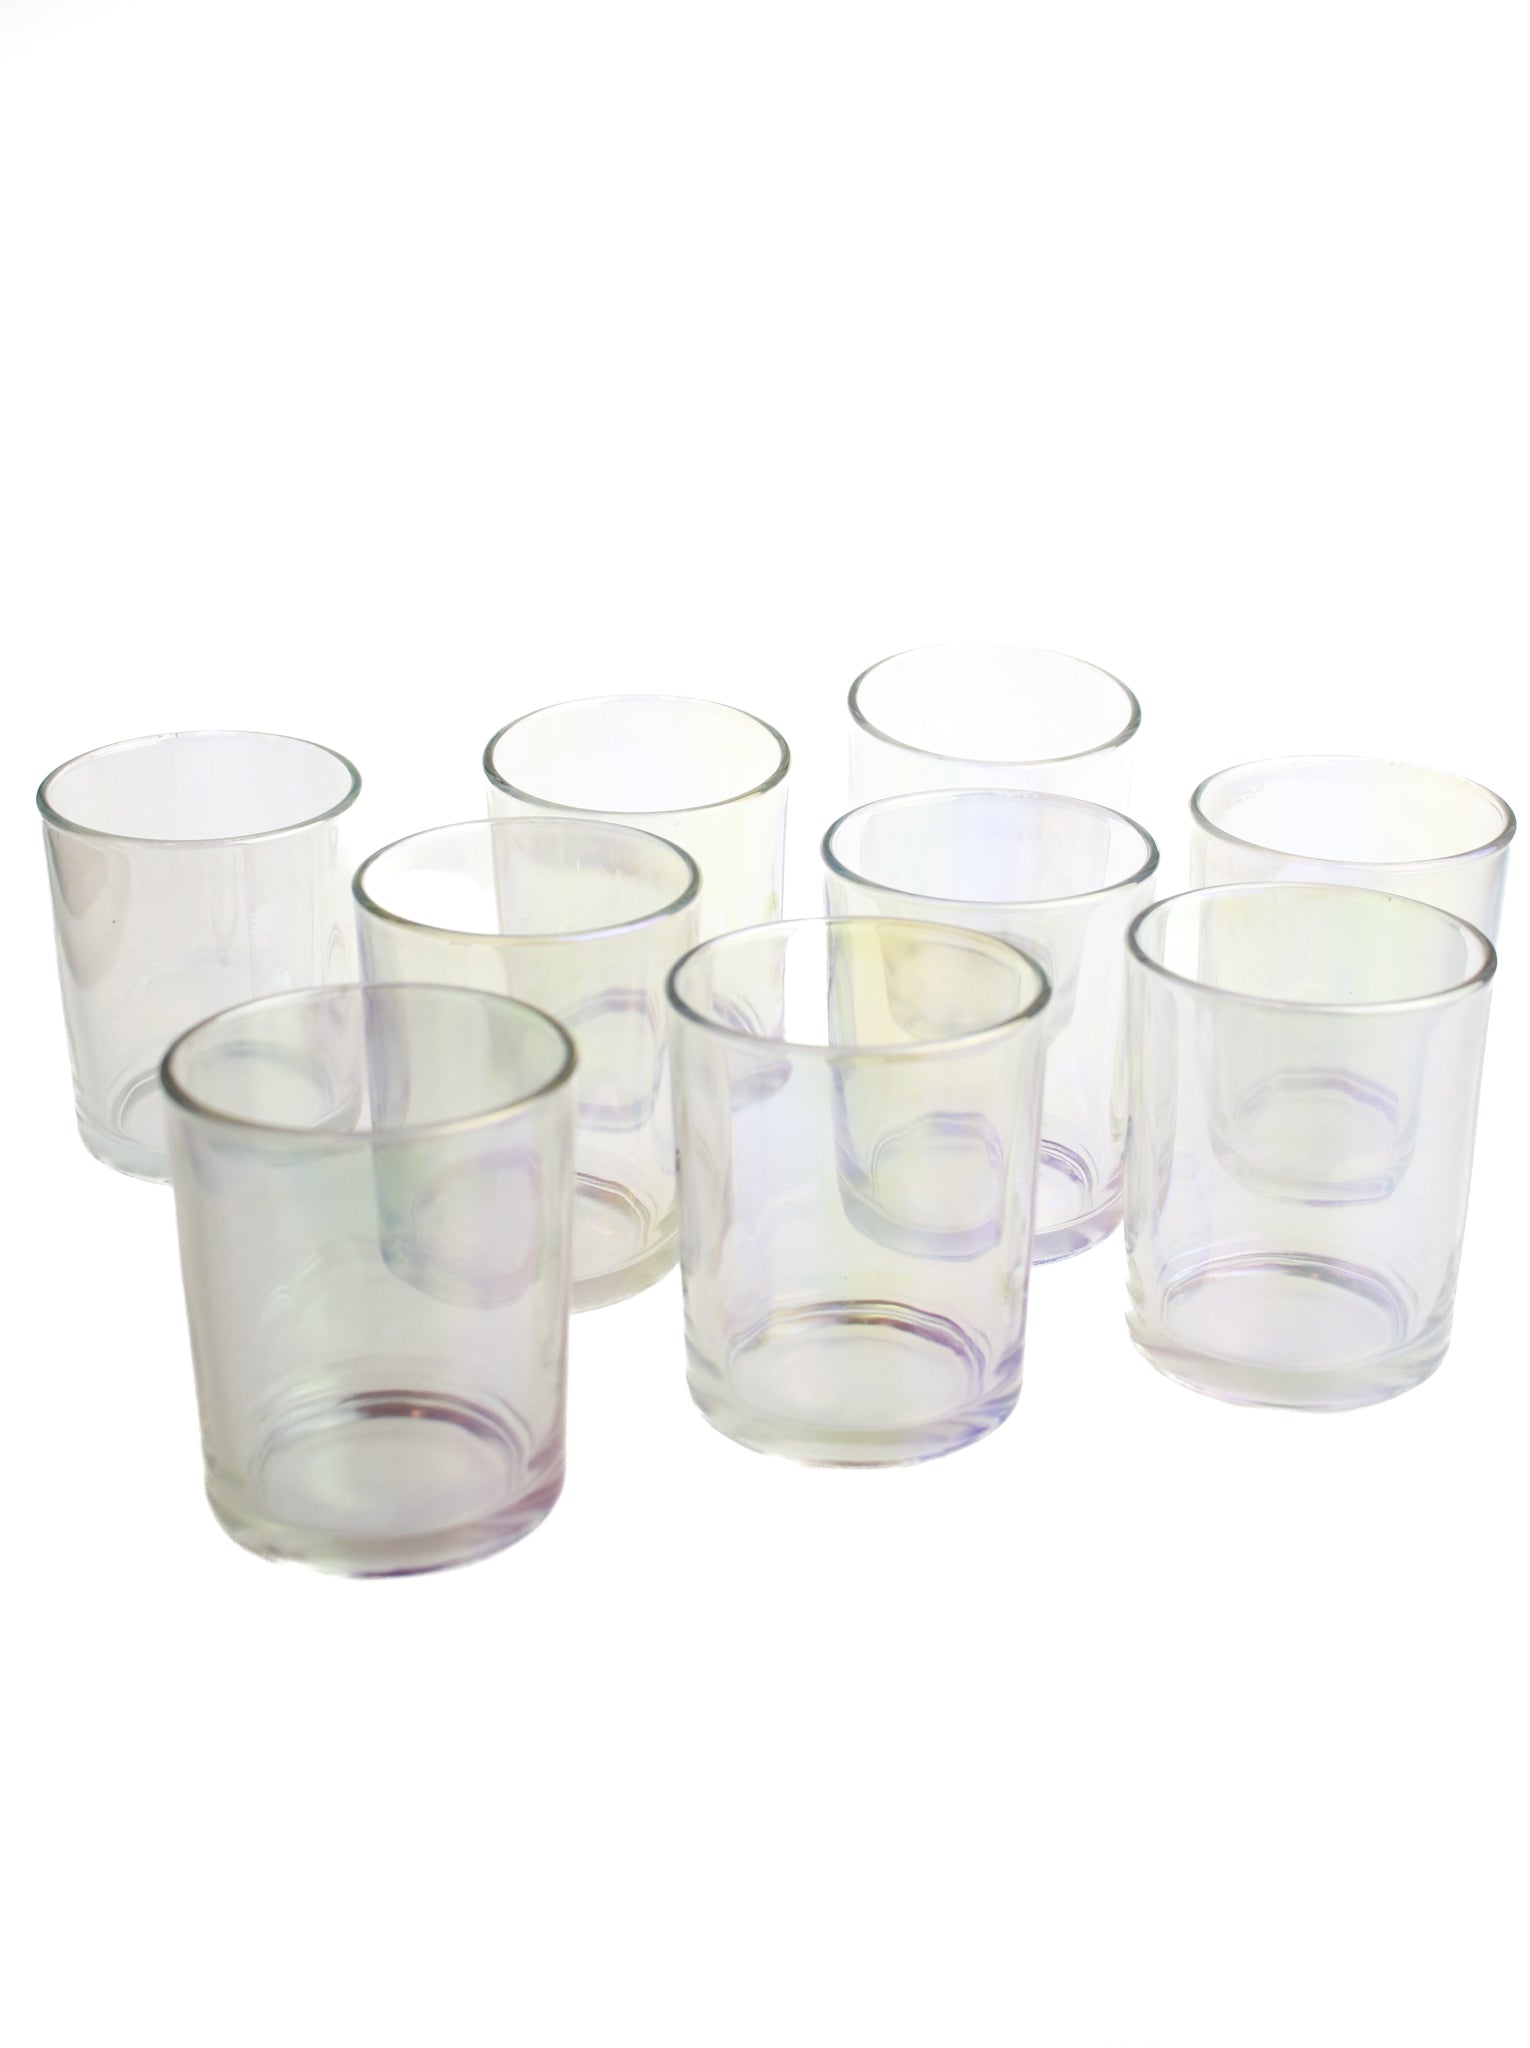 Iridescent Juice Glasses (Set of 9)